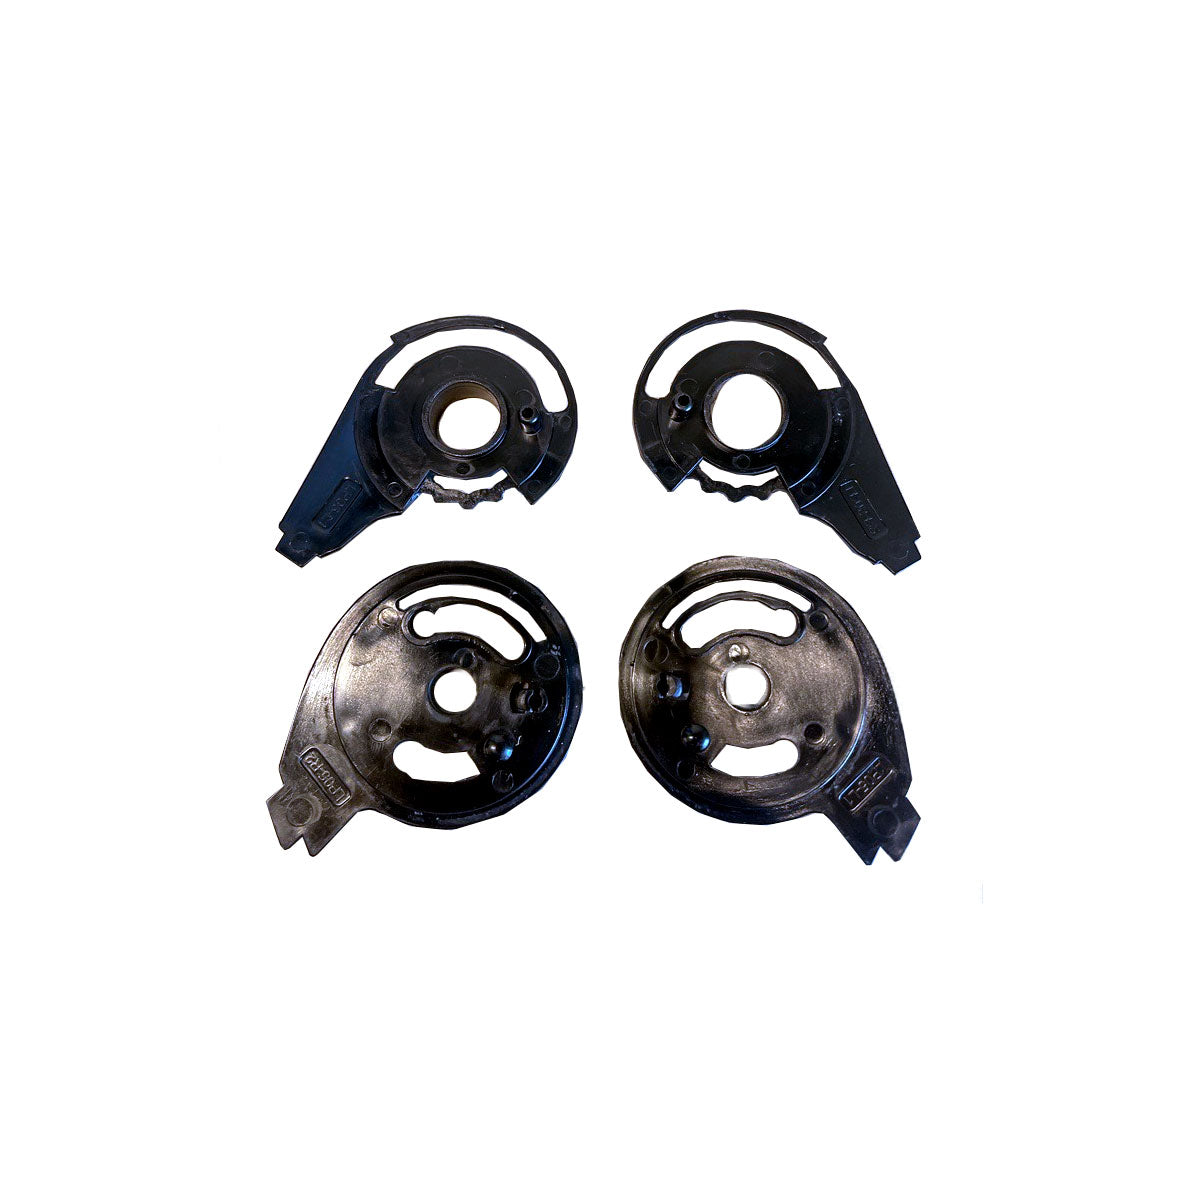 Ratchet Set for Delta R4 Helmets